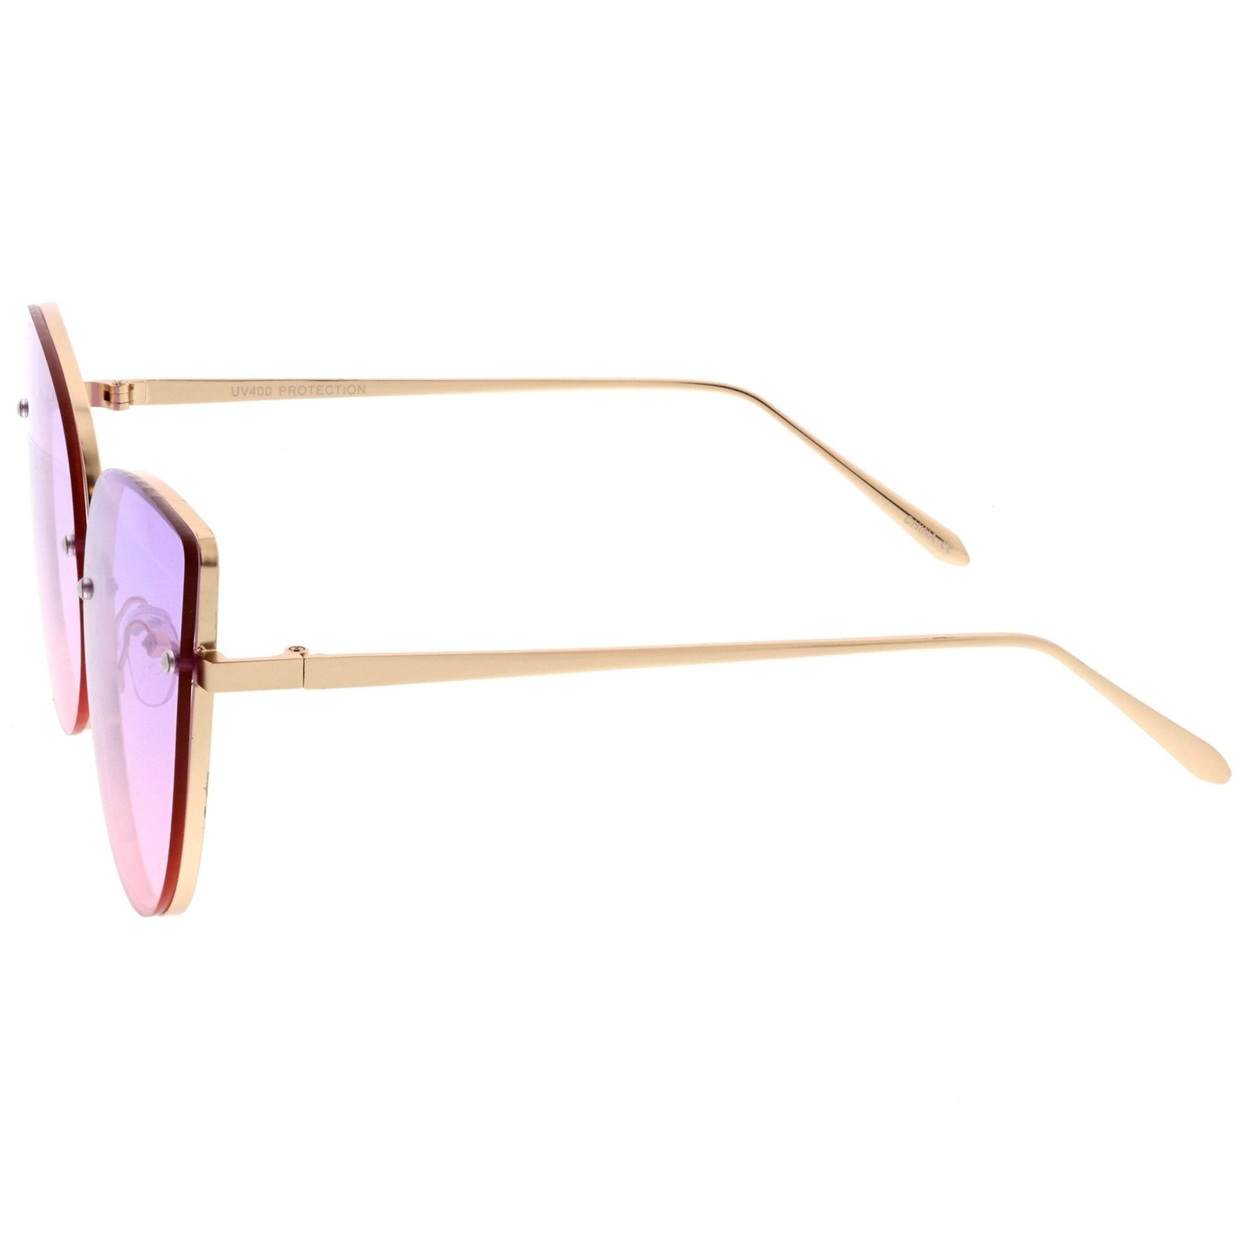 Women's Oversize Slim Metal Rimless Gradient Flat Lens Cat Eye Sunglasses 61mm - Gold / Blue-Yellow